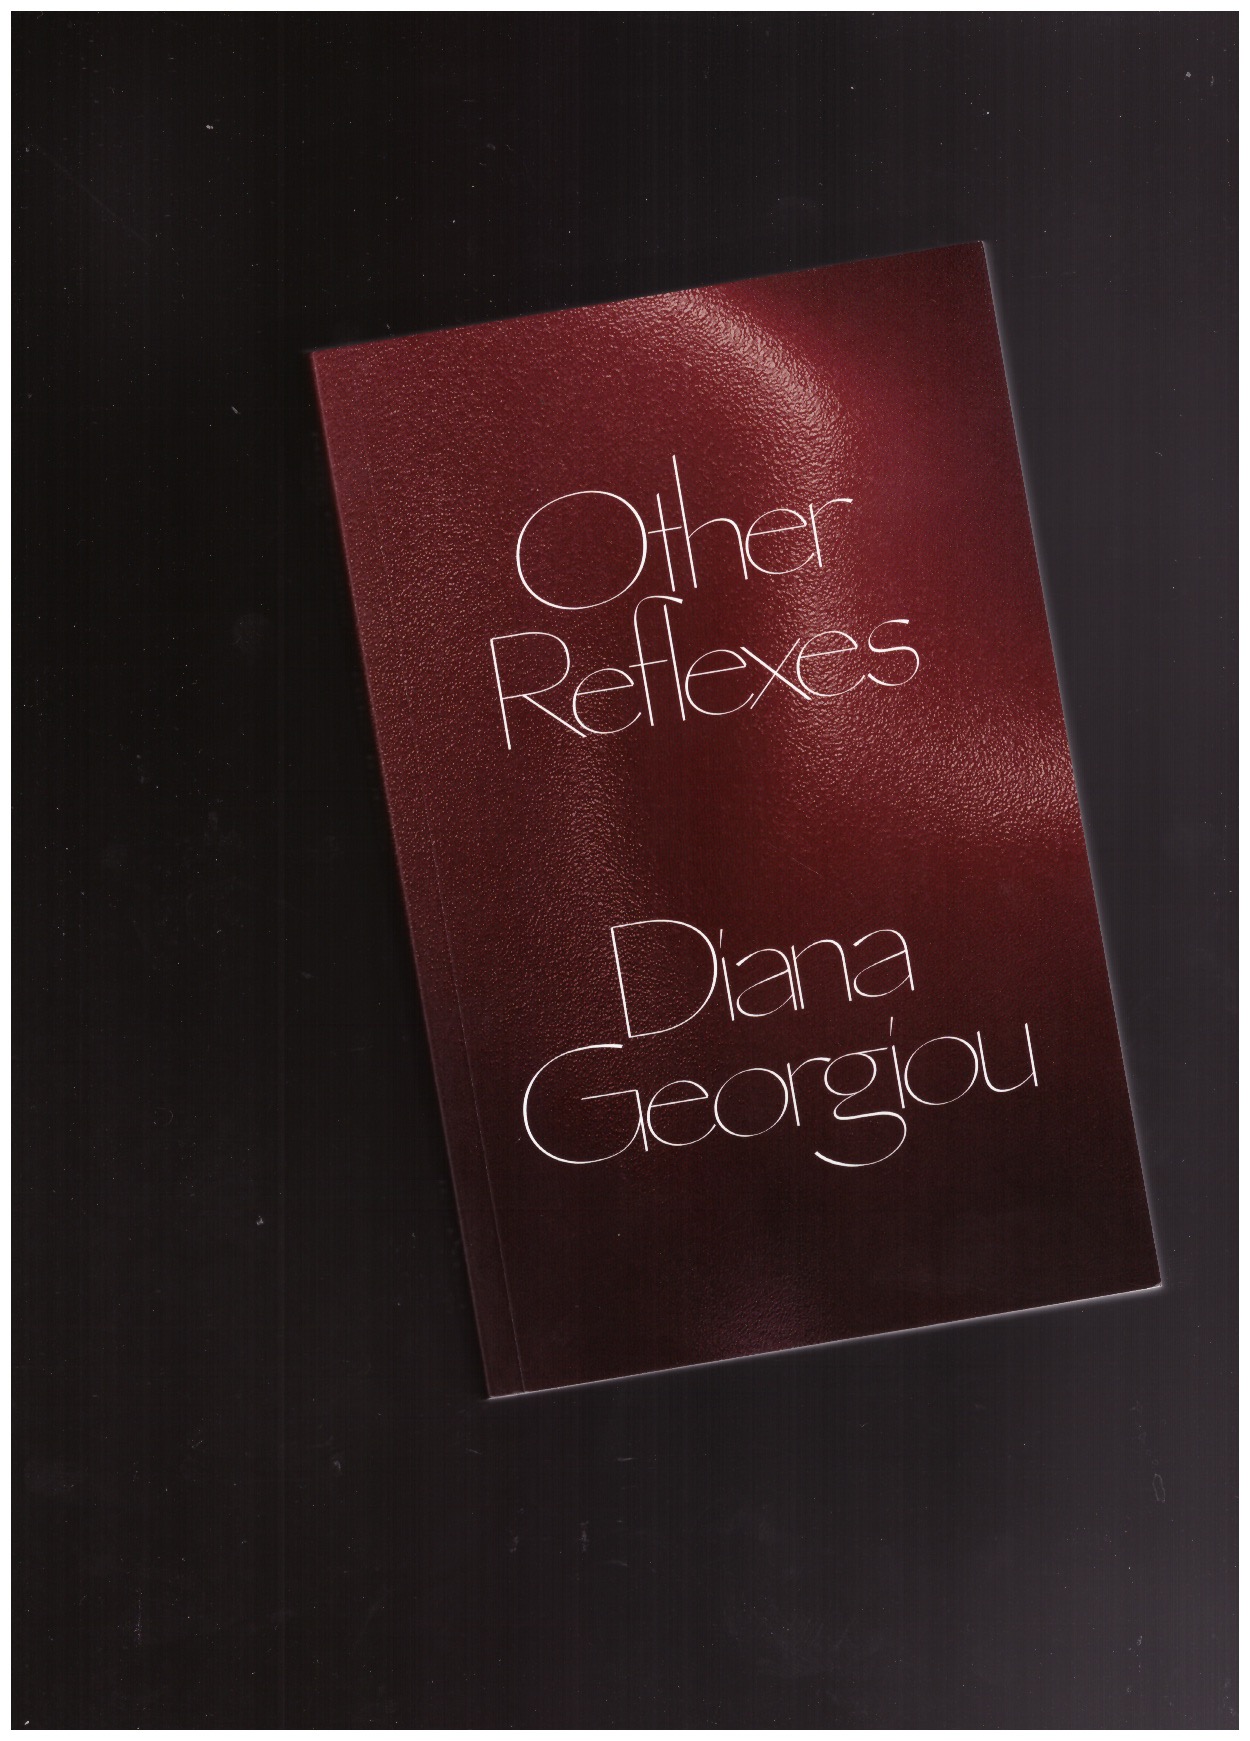 GEORGIOU, Diana - Other Reflexes